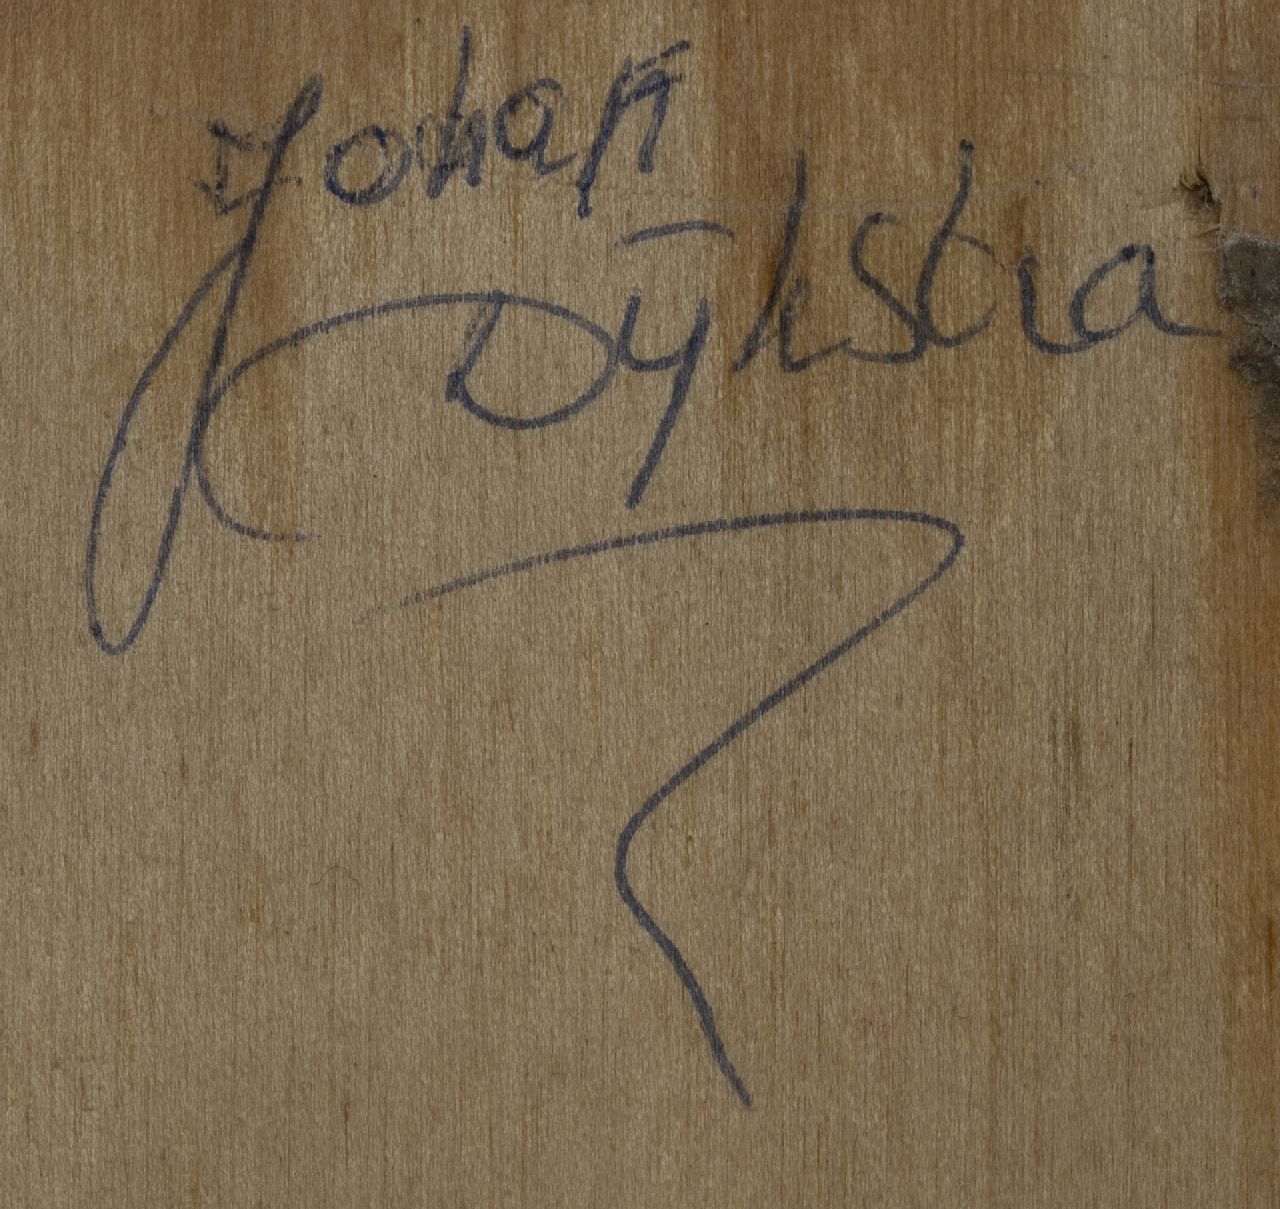 Johan Dijkstra signaturen Duiventil Blauwborgje